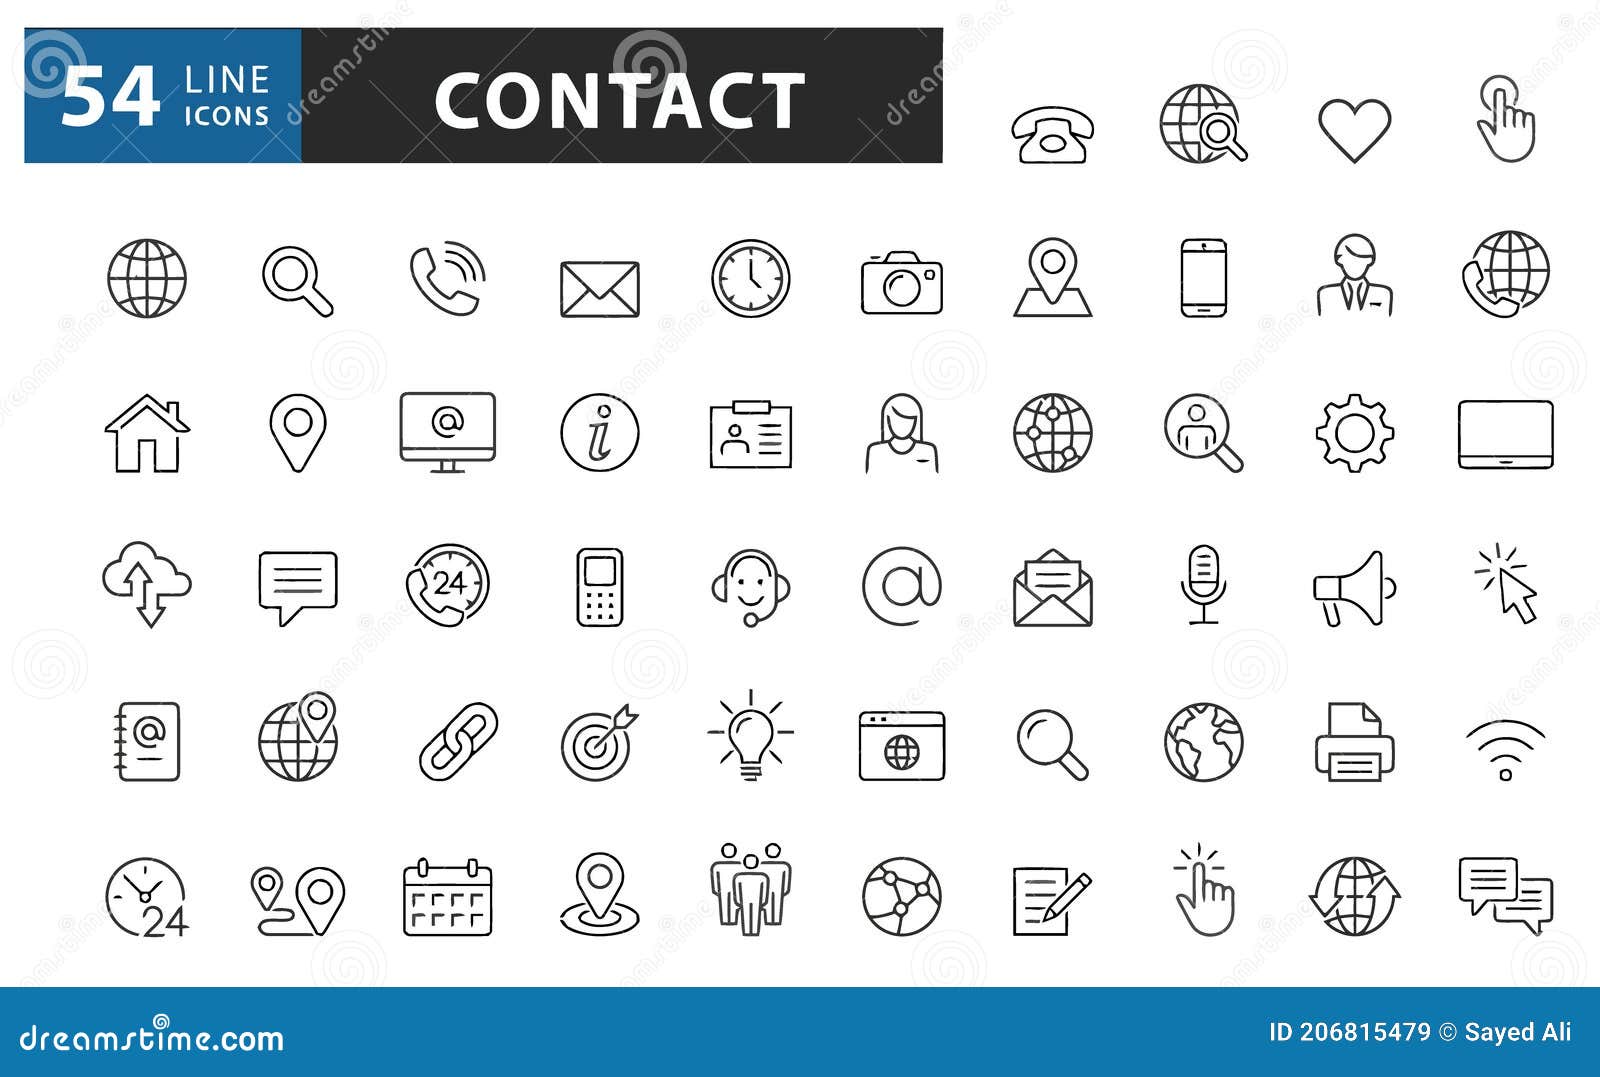 Contact Us Icons. Contact Glyphs Icon Set on White Background. Phone,  Smartphone, Email, Location, House, Globe, Address, Chat Stock Illustration  - Illustration of communication, phone: 206815479